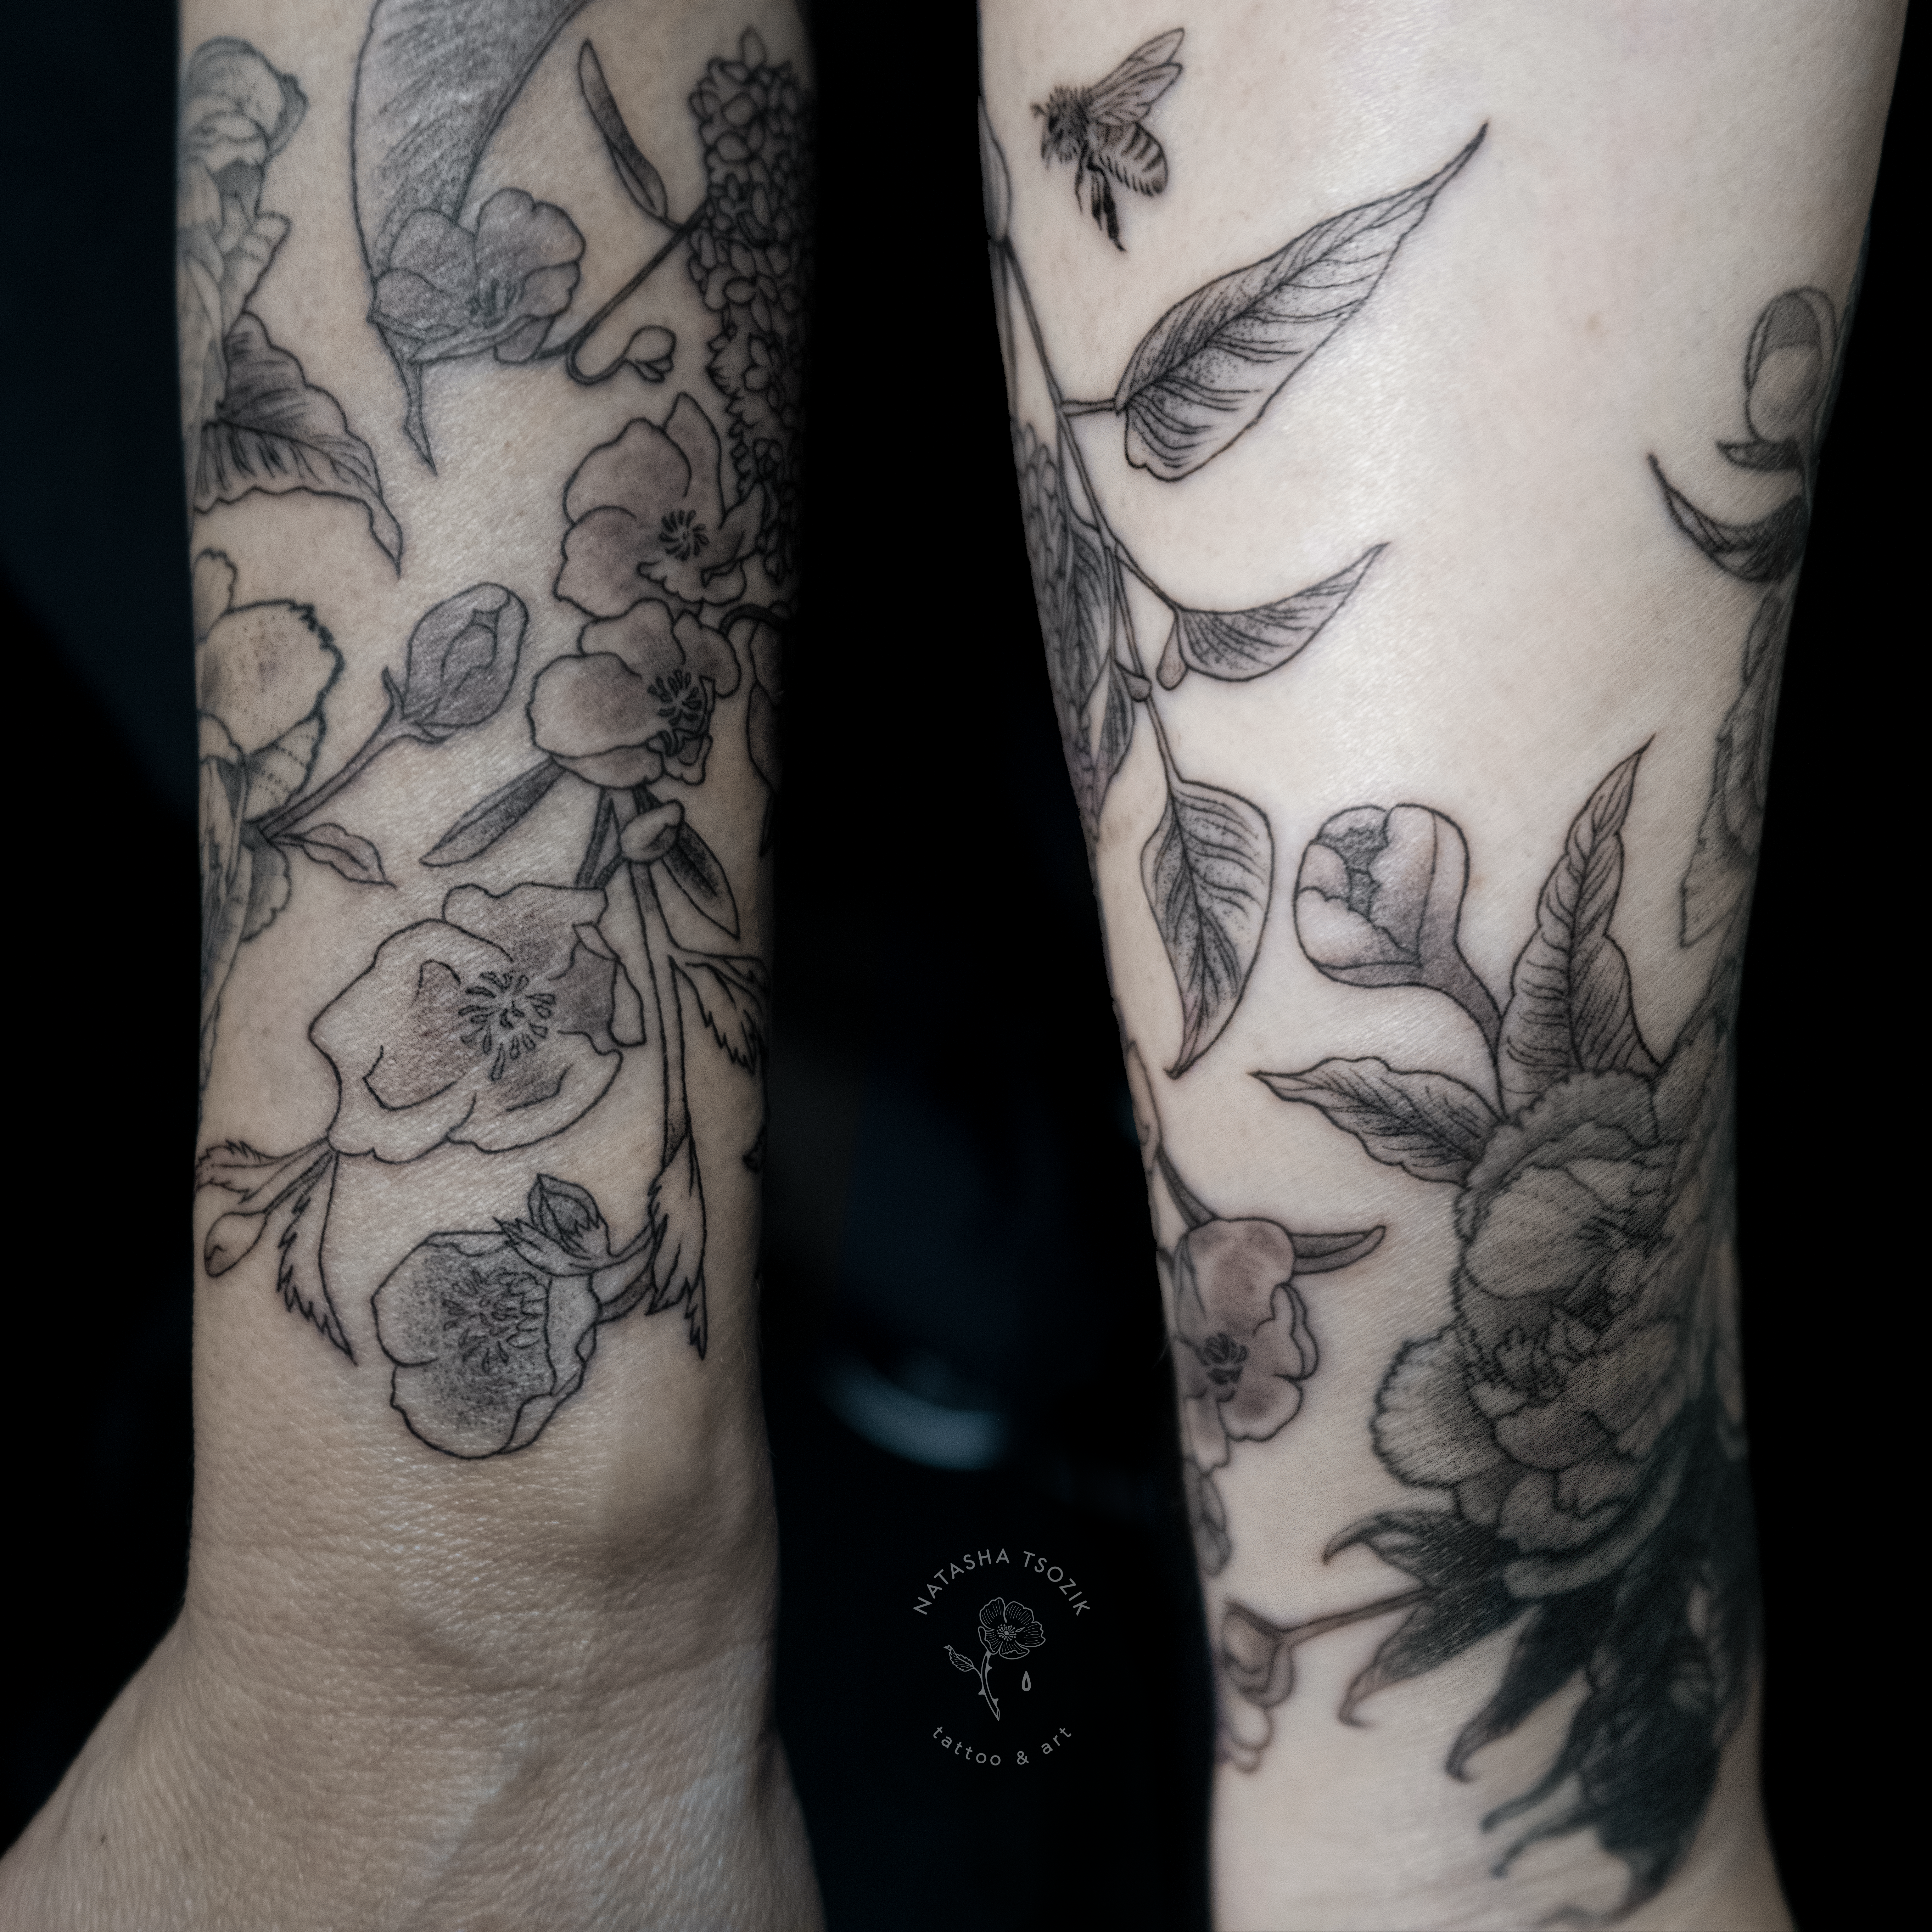 Language of Flowers 2 fine line tattoo by Natasha Tsozik fd